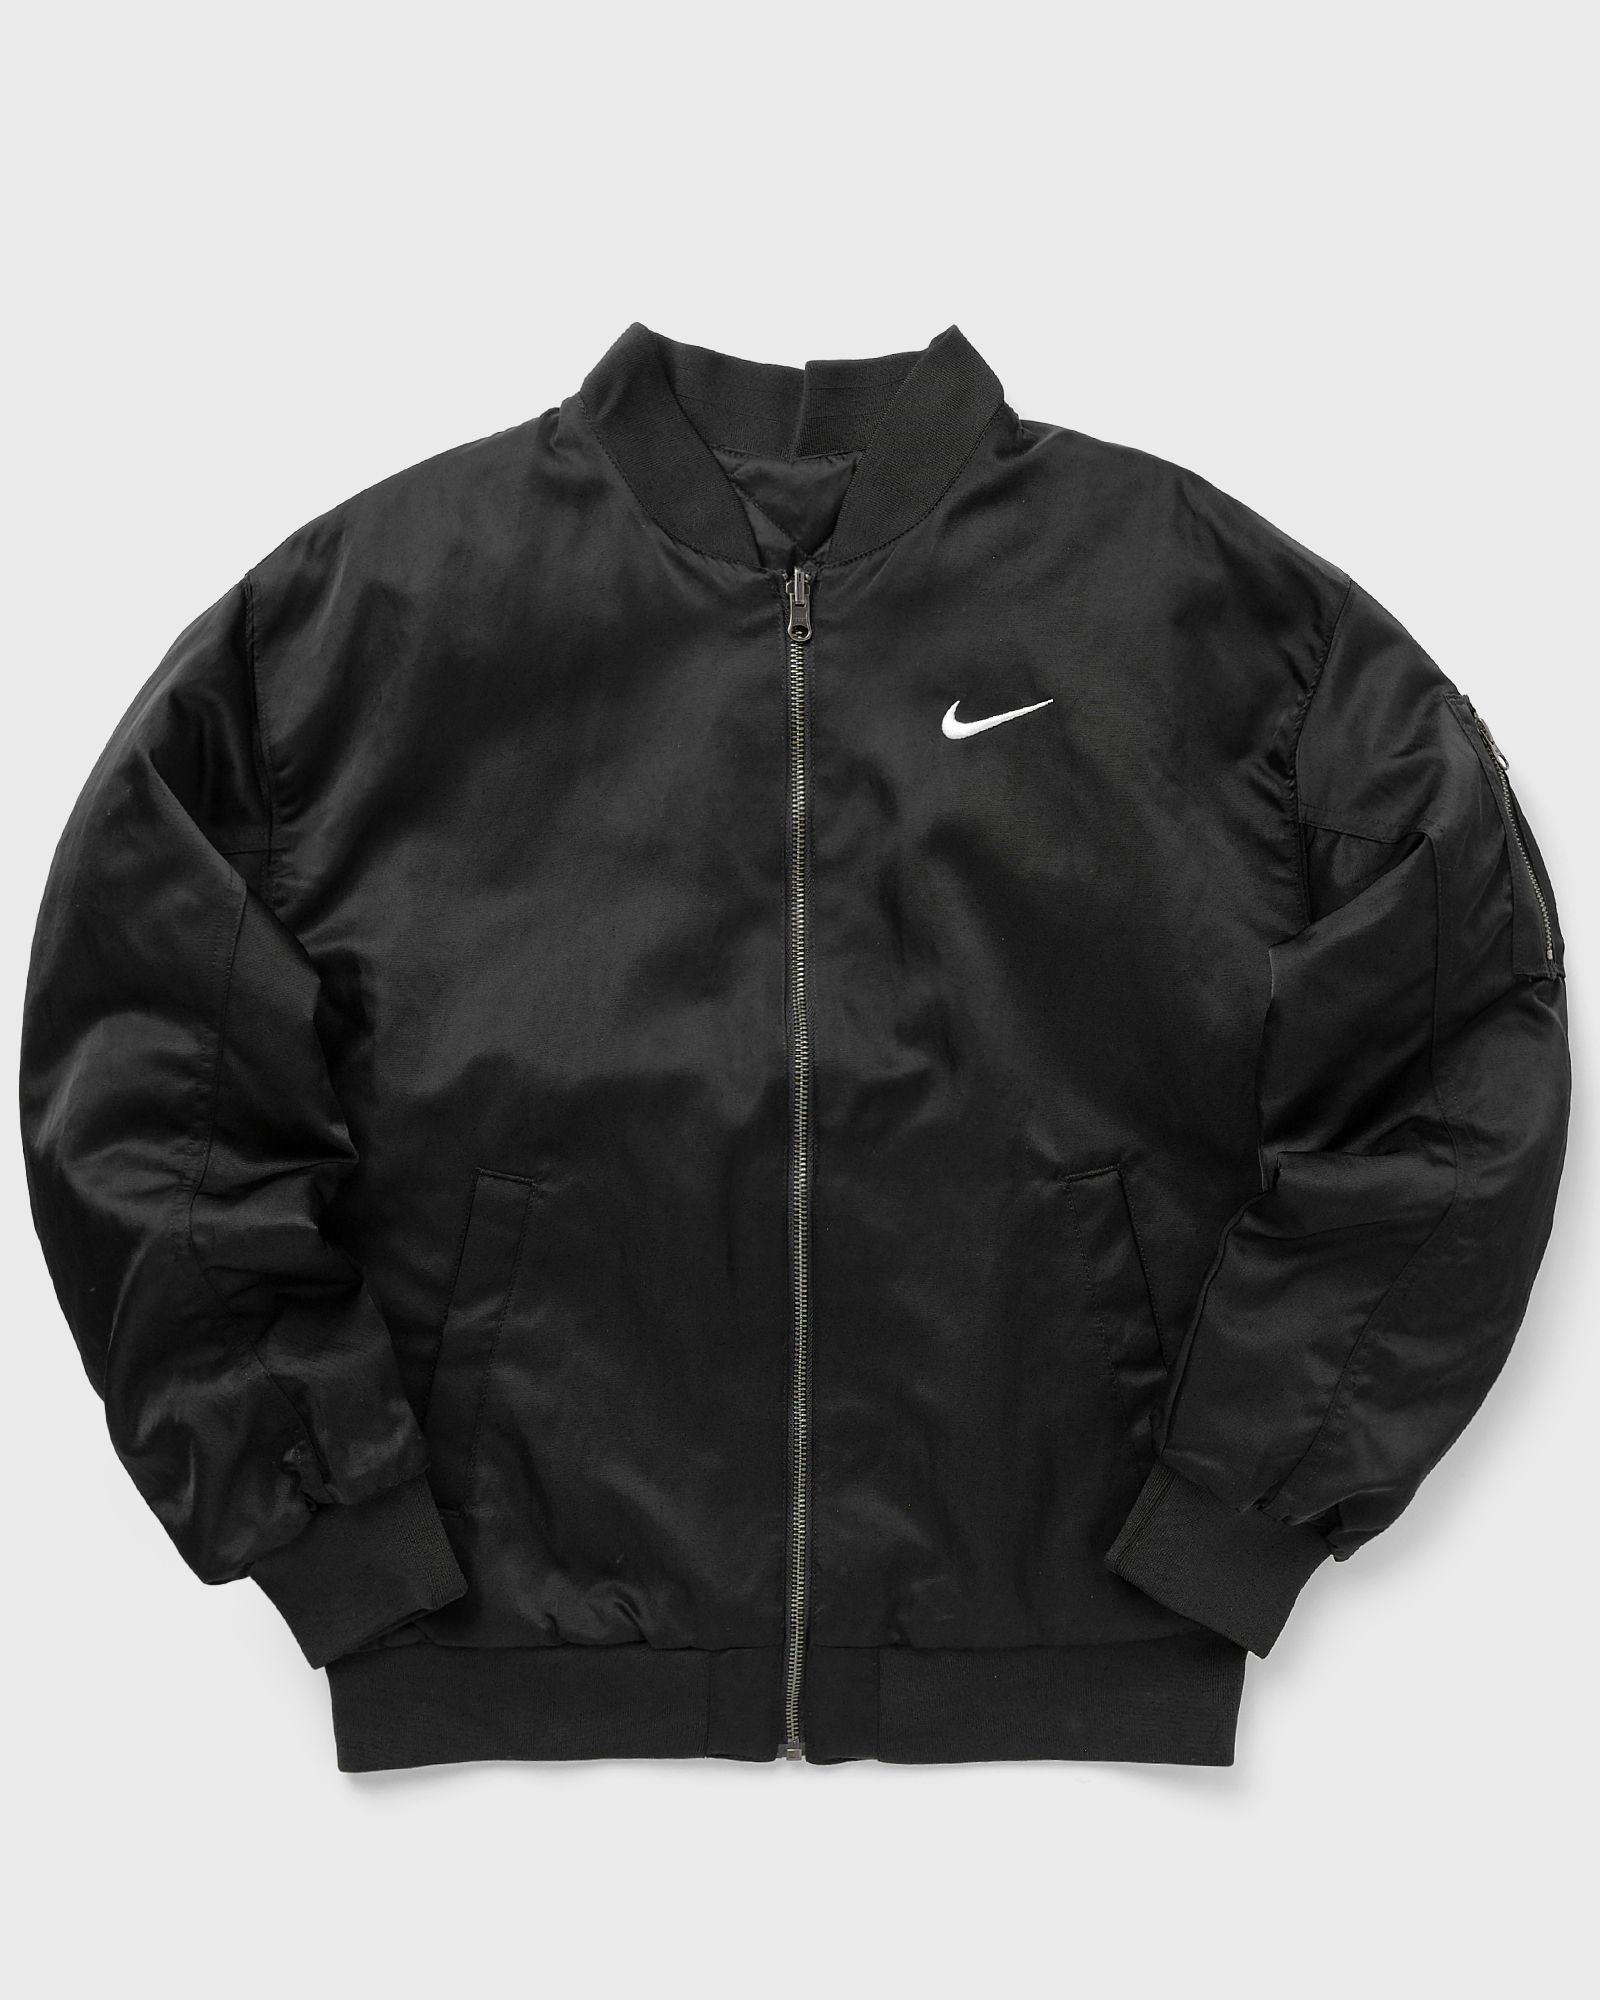 Nike - wmns reversible varsity bomber jacket women bomber jackets black in größe:l